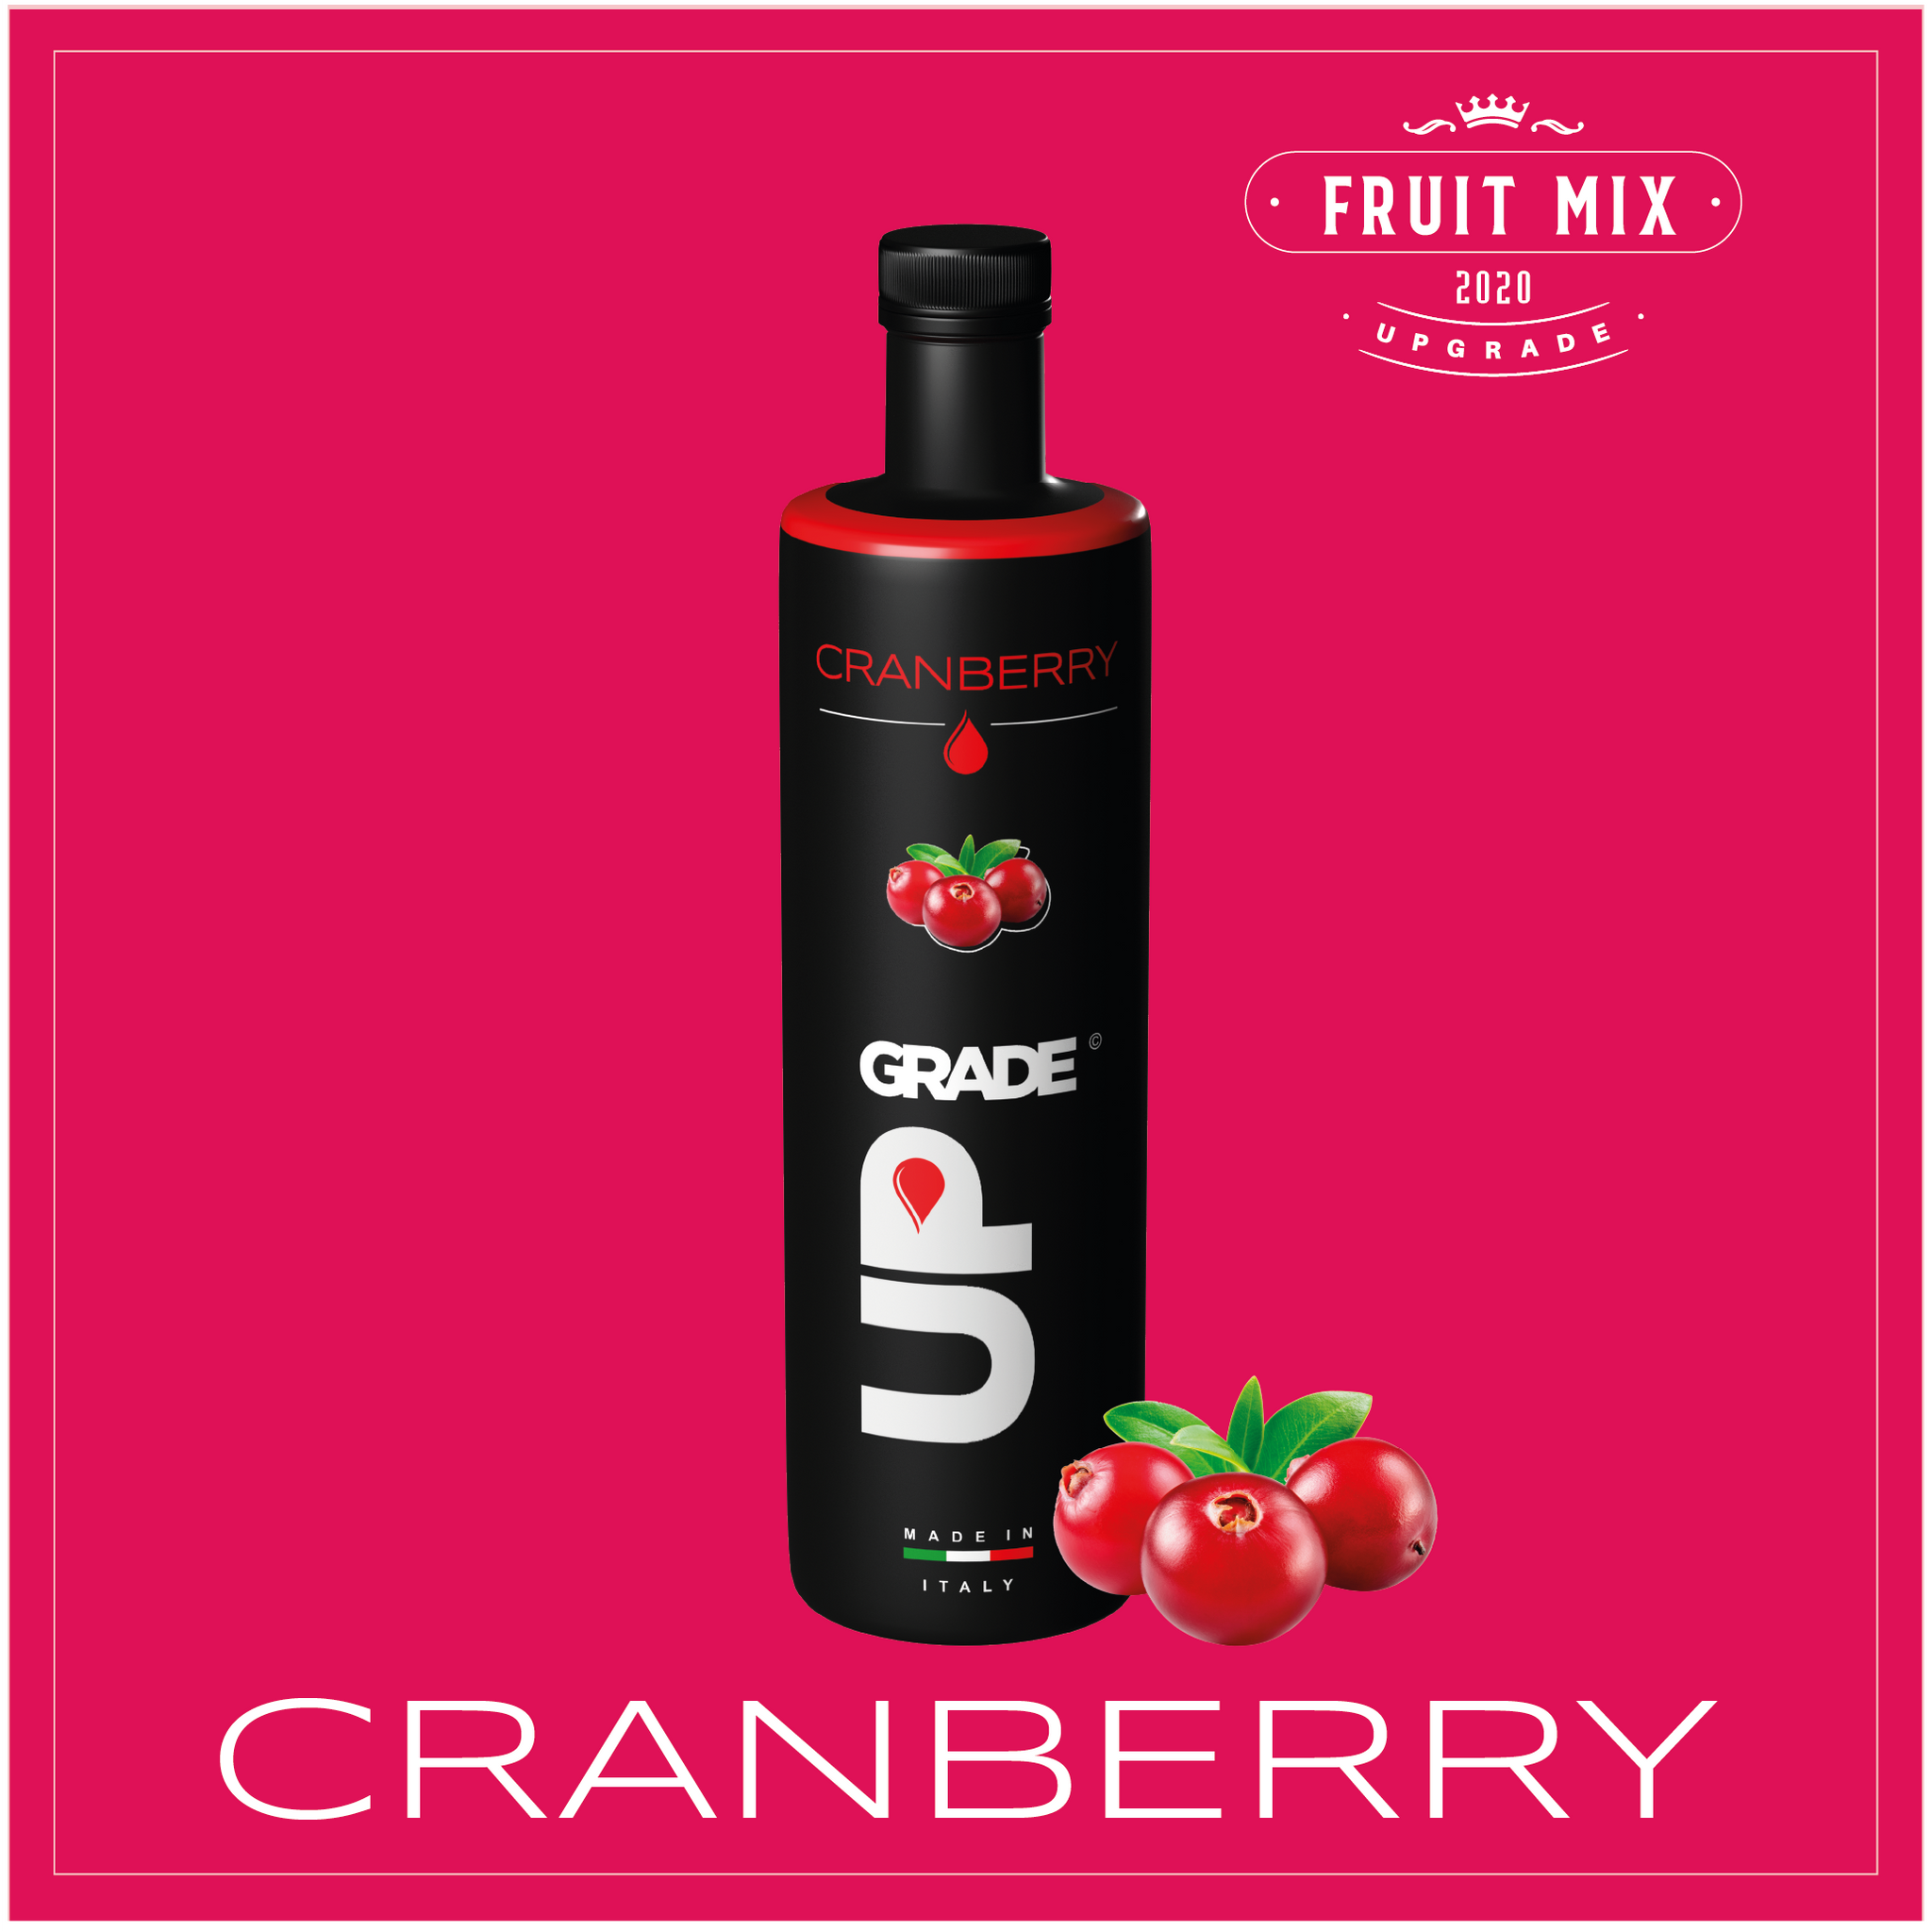 UPGRADE Fruit Mix - Cranberry / Mirtillo rosso